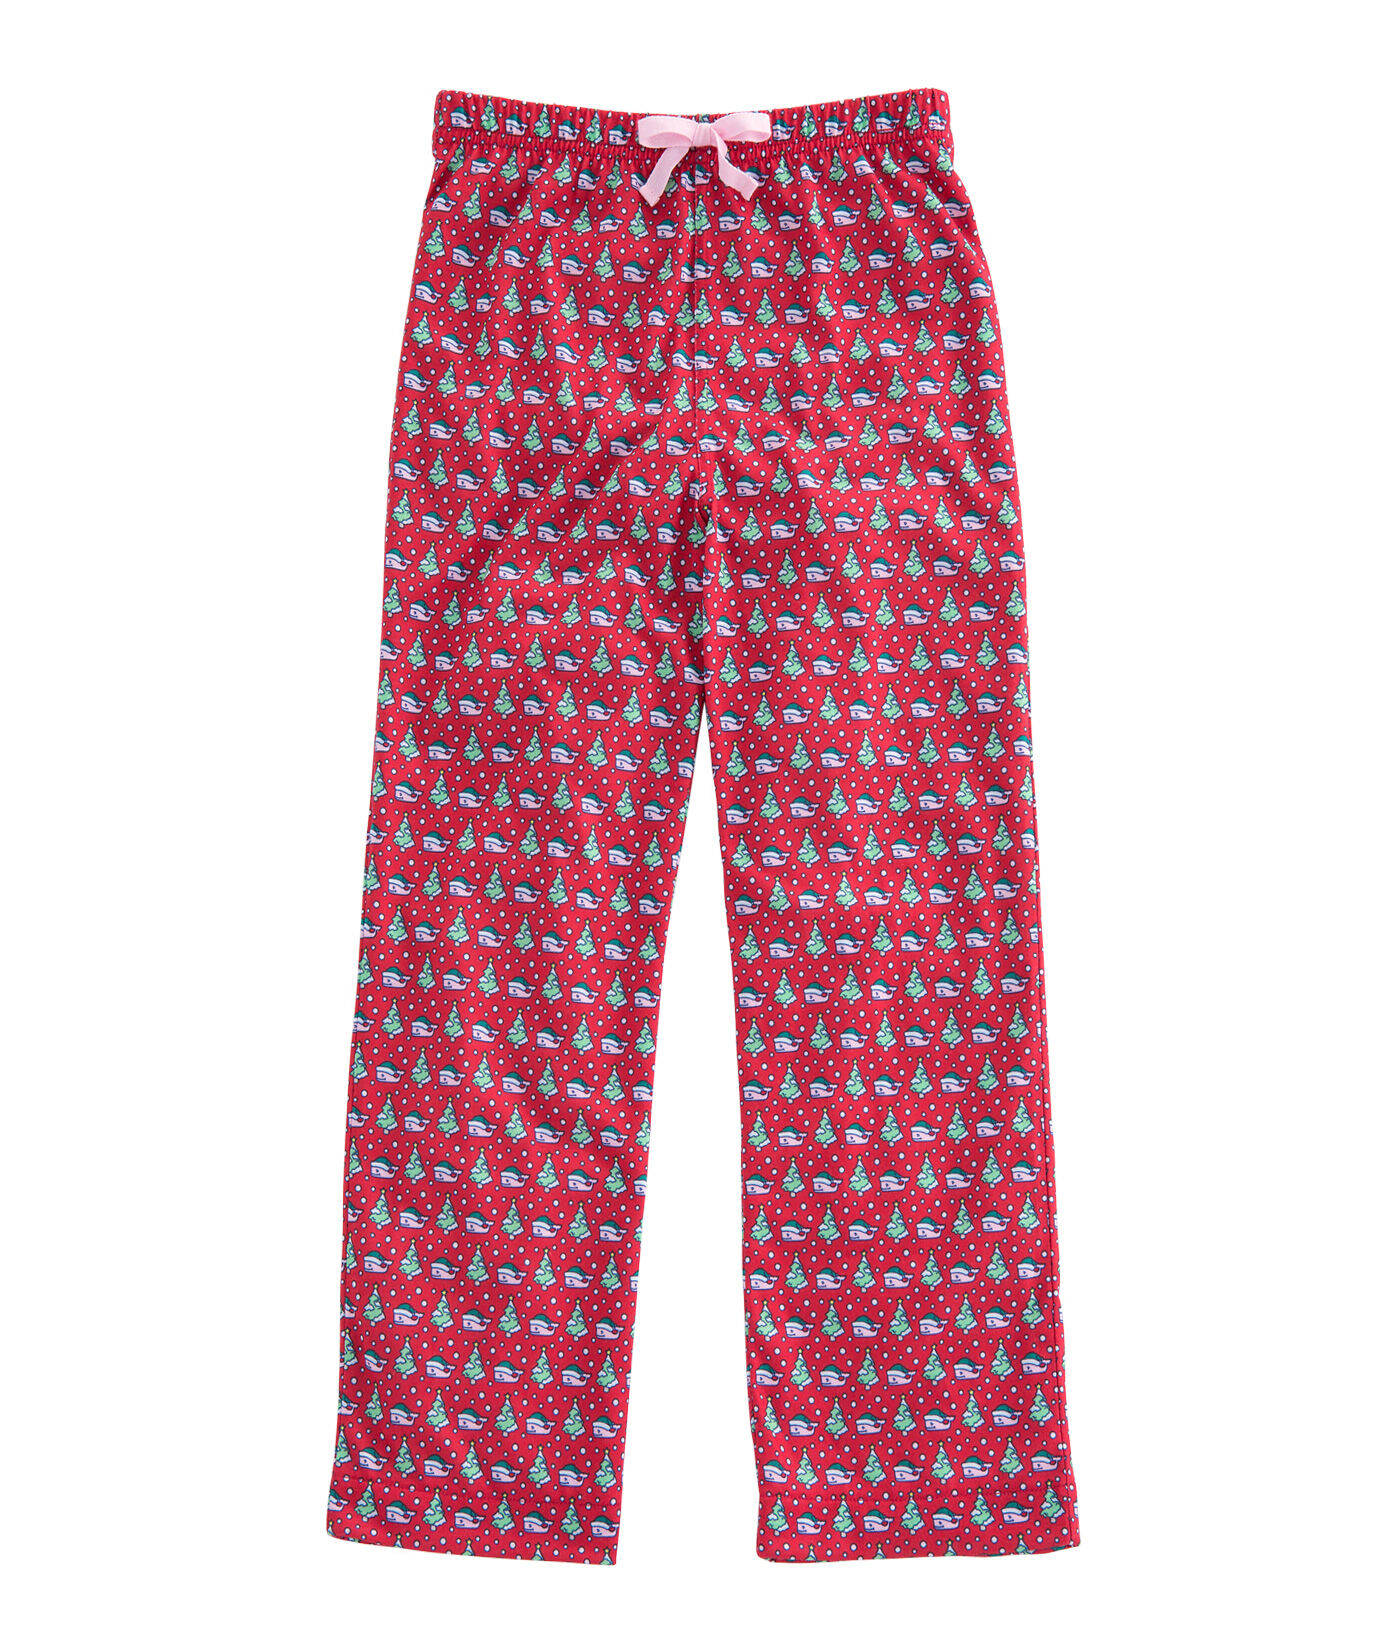 Vineyard Vines Club Pant Chino Flat Front Cotton Pants Pink Men's 32x32 |  SidelineSwap